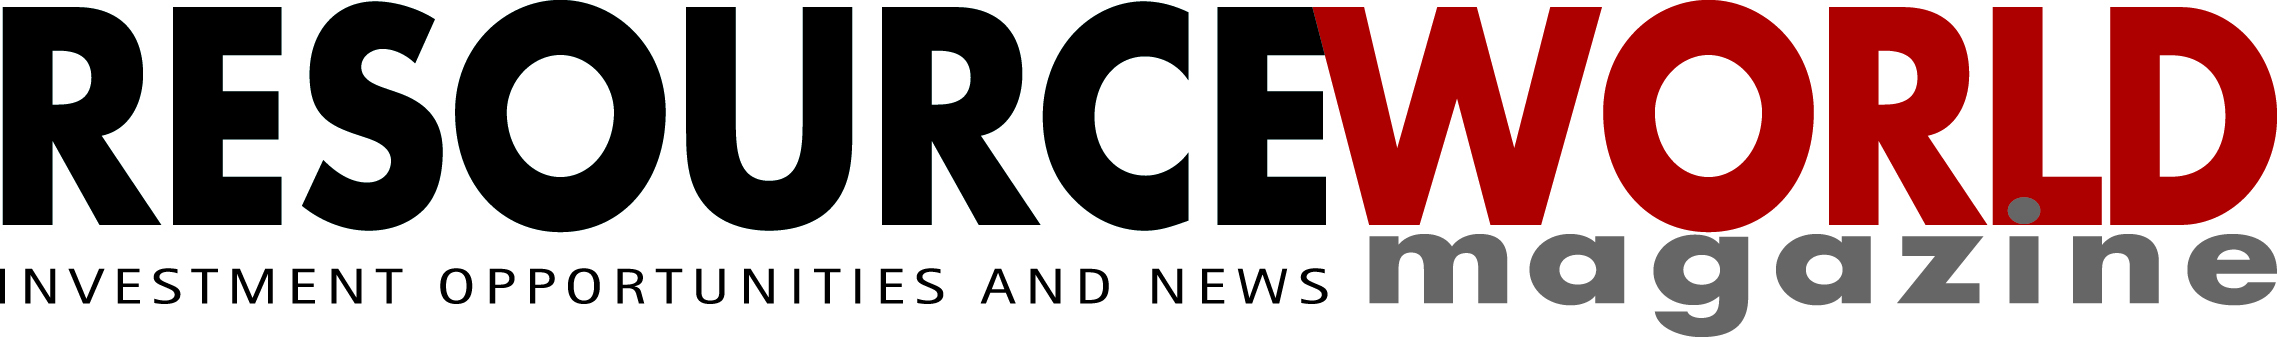 Resource World Magazine inc. Logo